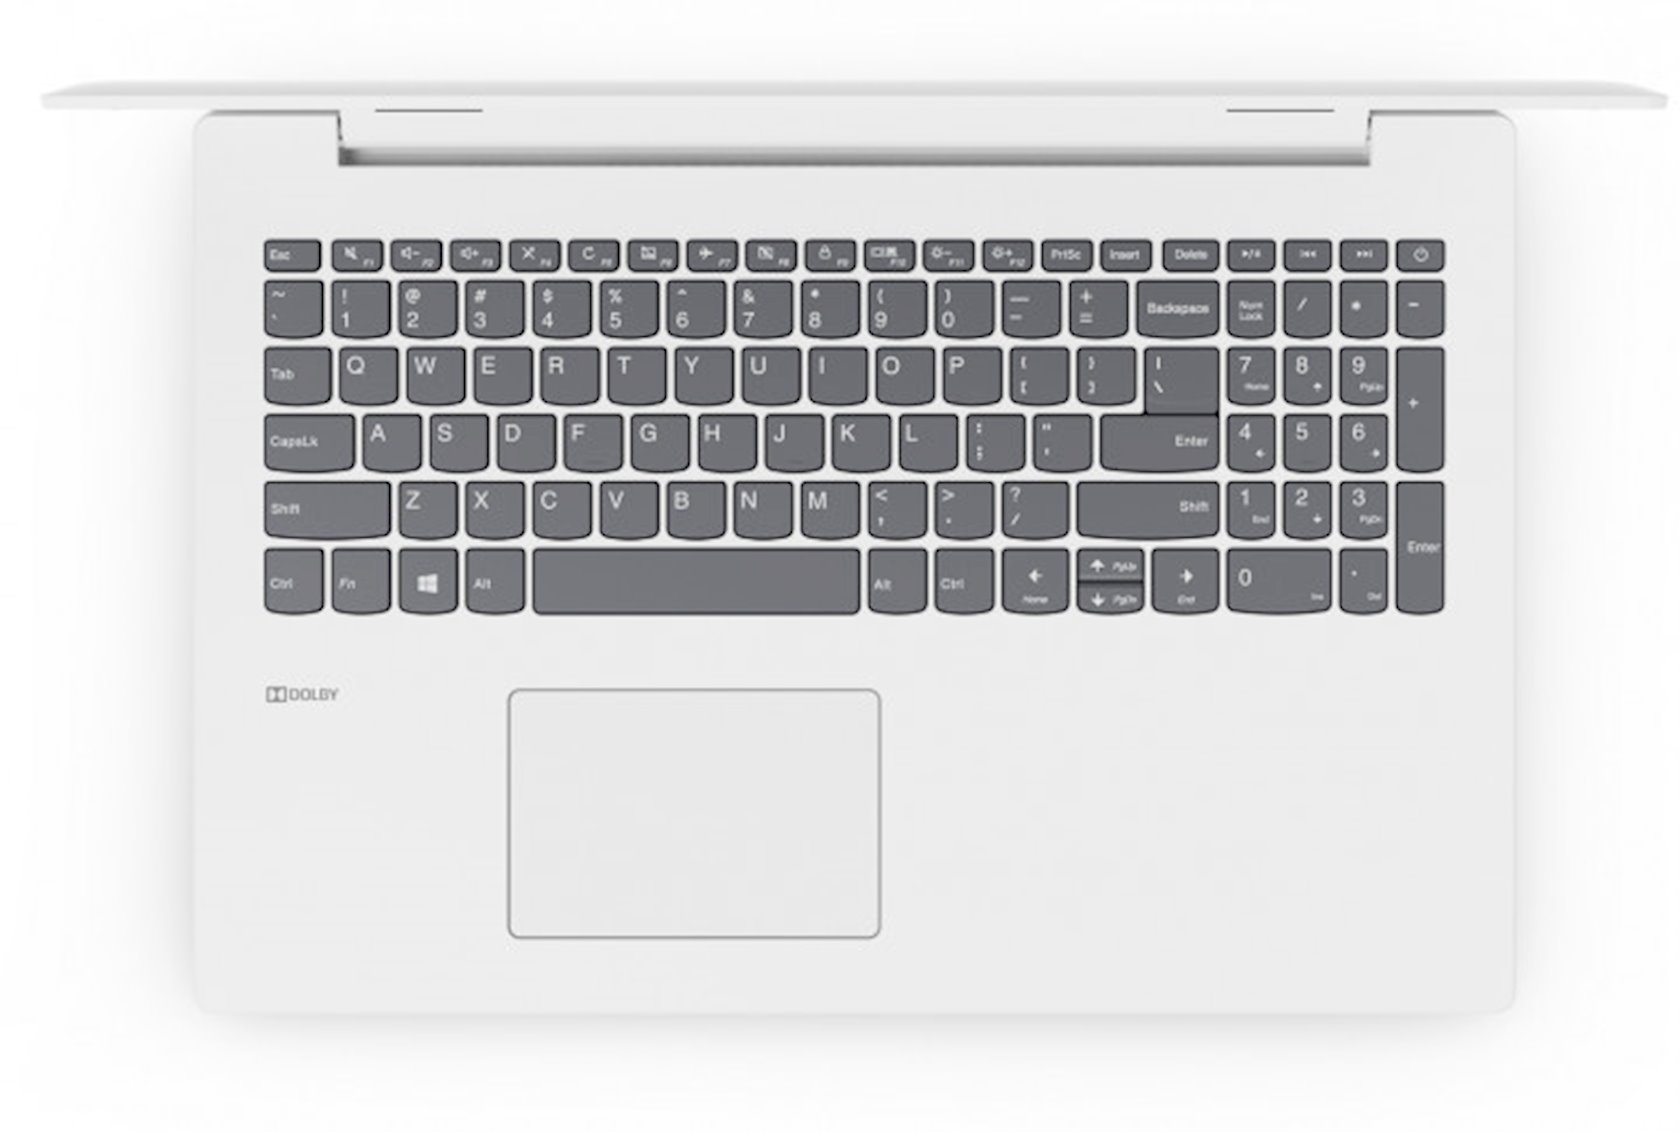 Ноутбук Lenovo Ideapad 330 15ikbr Купить